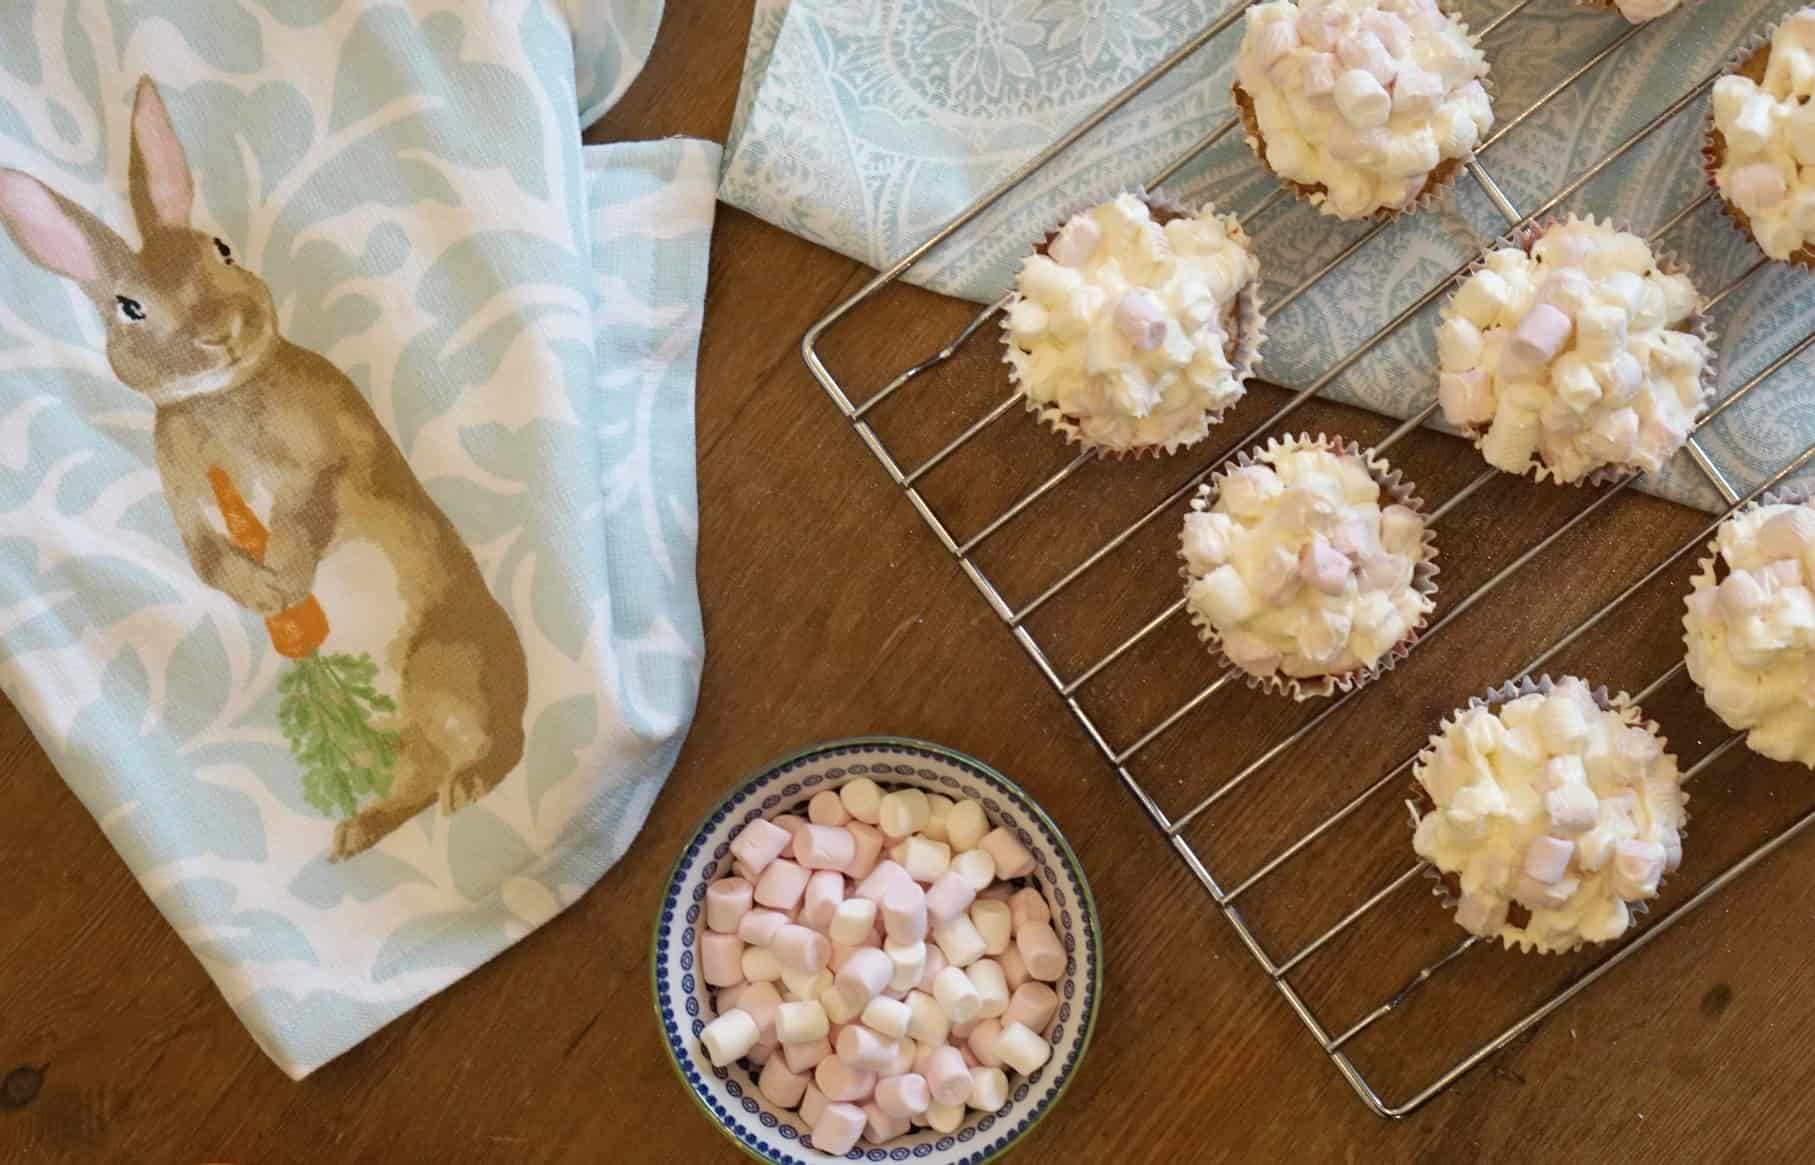 Home Made Delicious Marshmallow Cupcakes